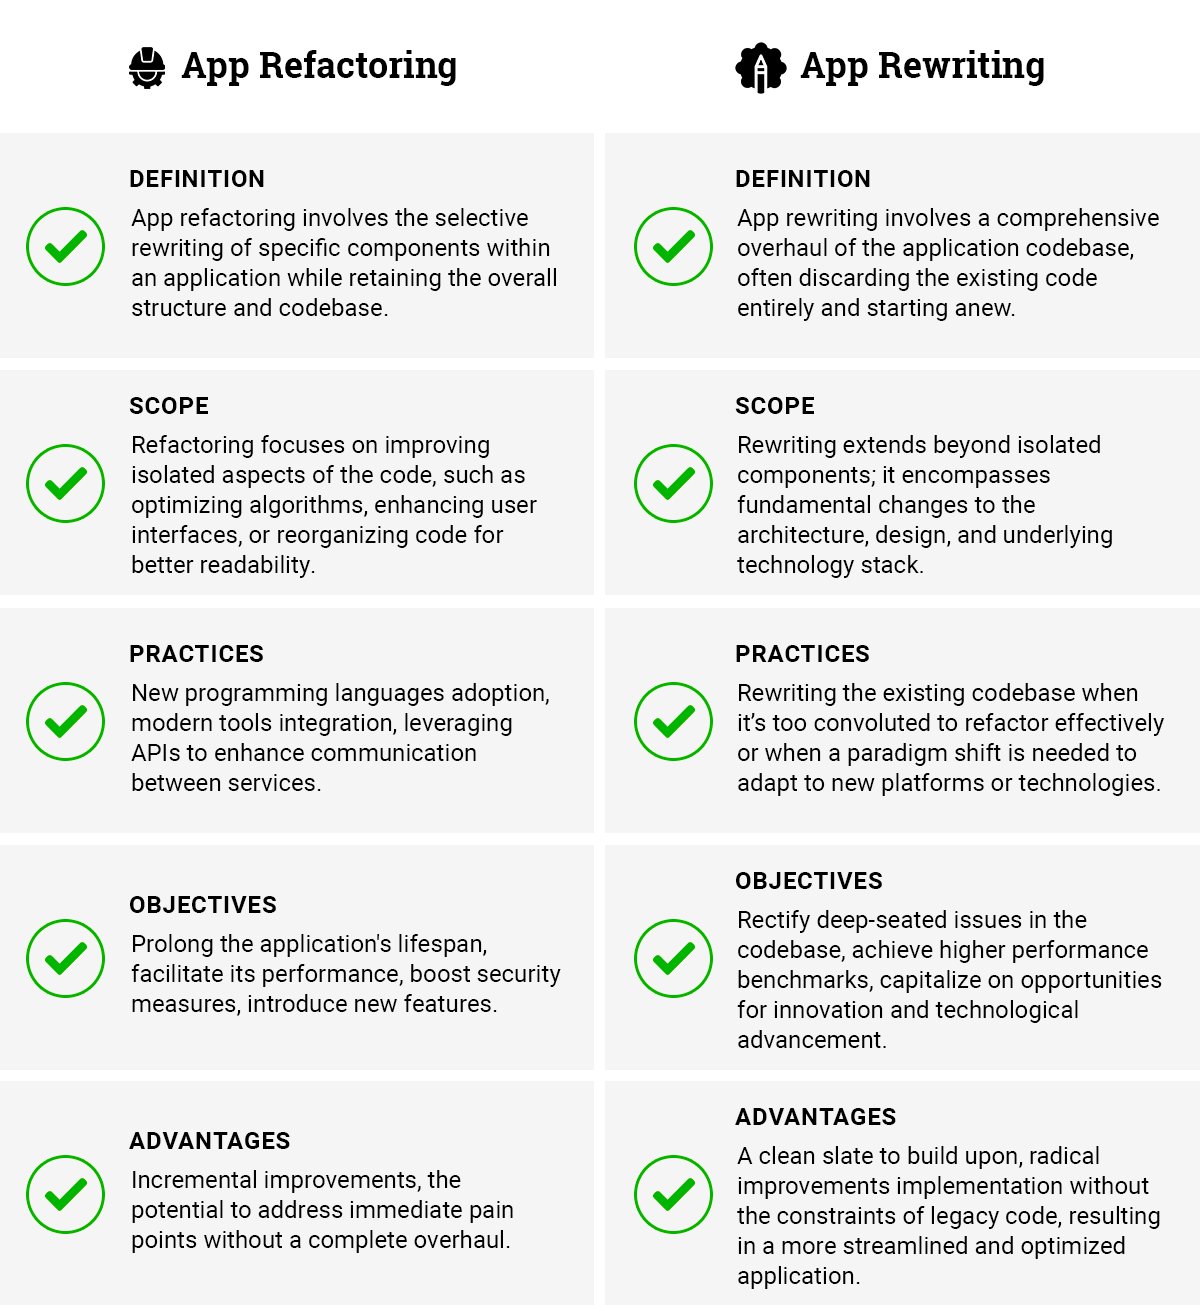 app-rewriting-vs-app-refactoring